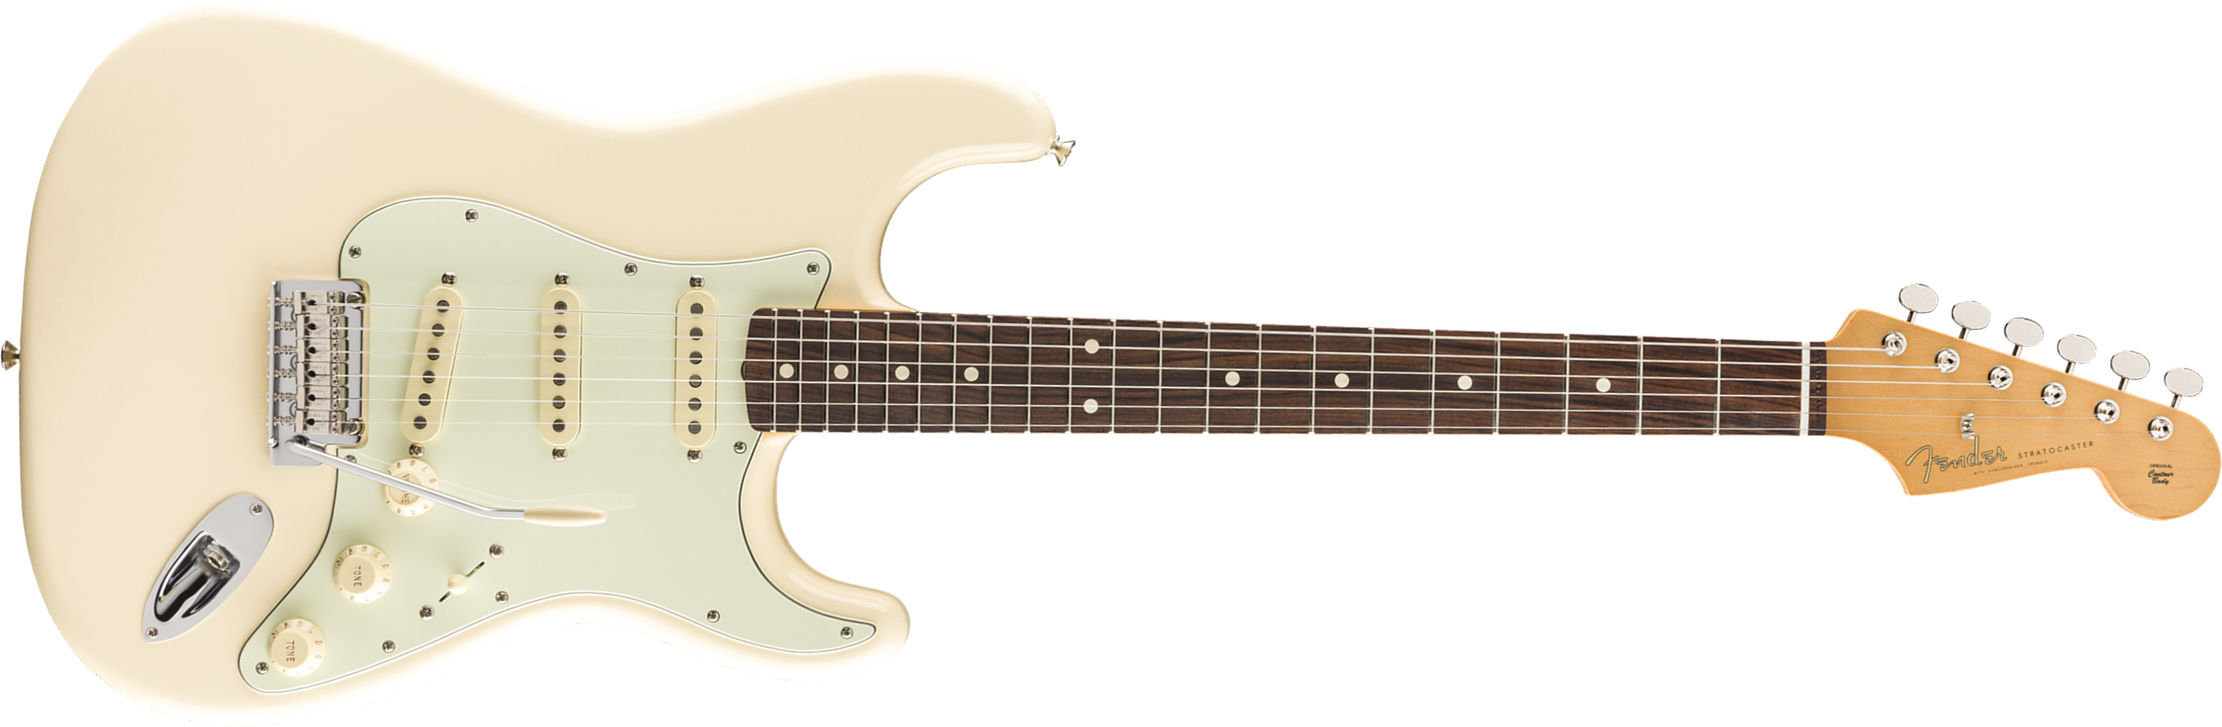 Fender Strat 60s Vintera Modified Mex Mn - Olympic White - Guitare Électrique Forme Str - Main picture